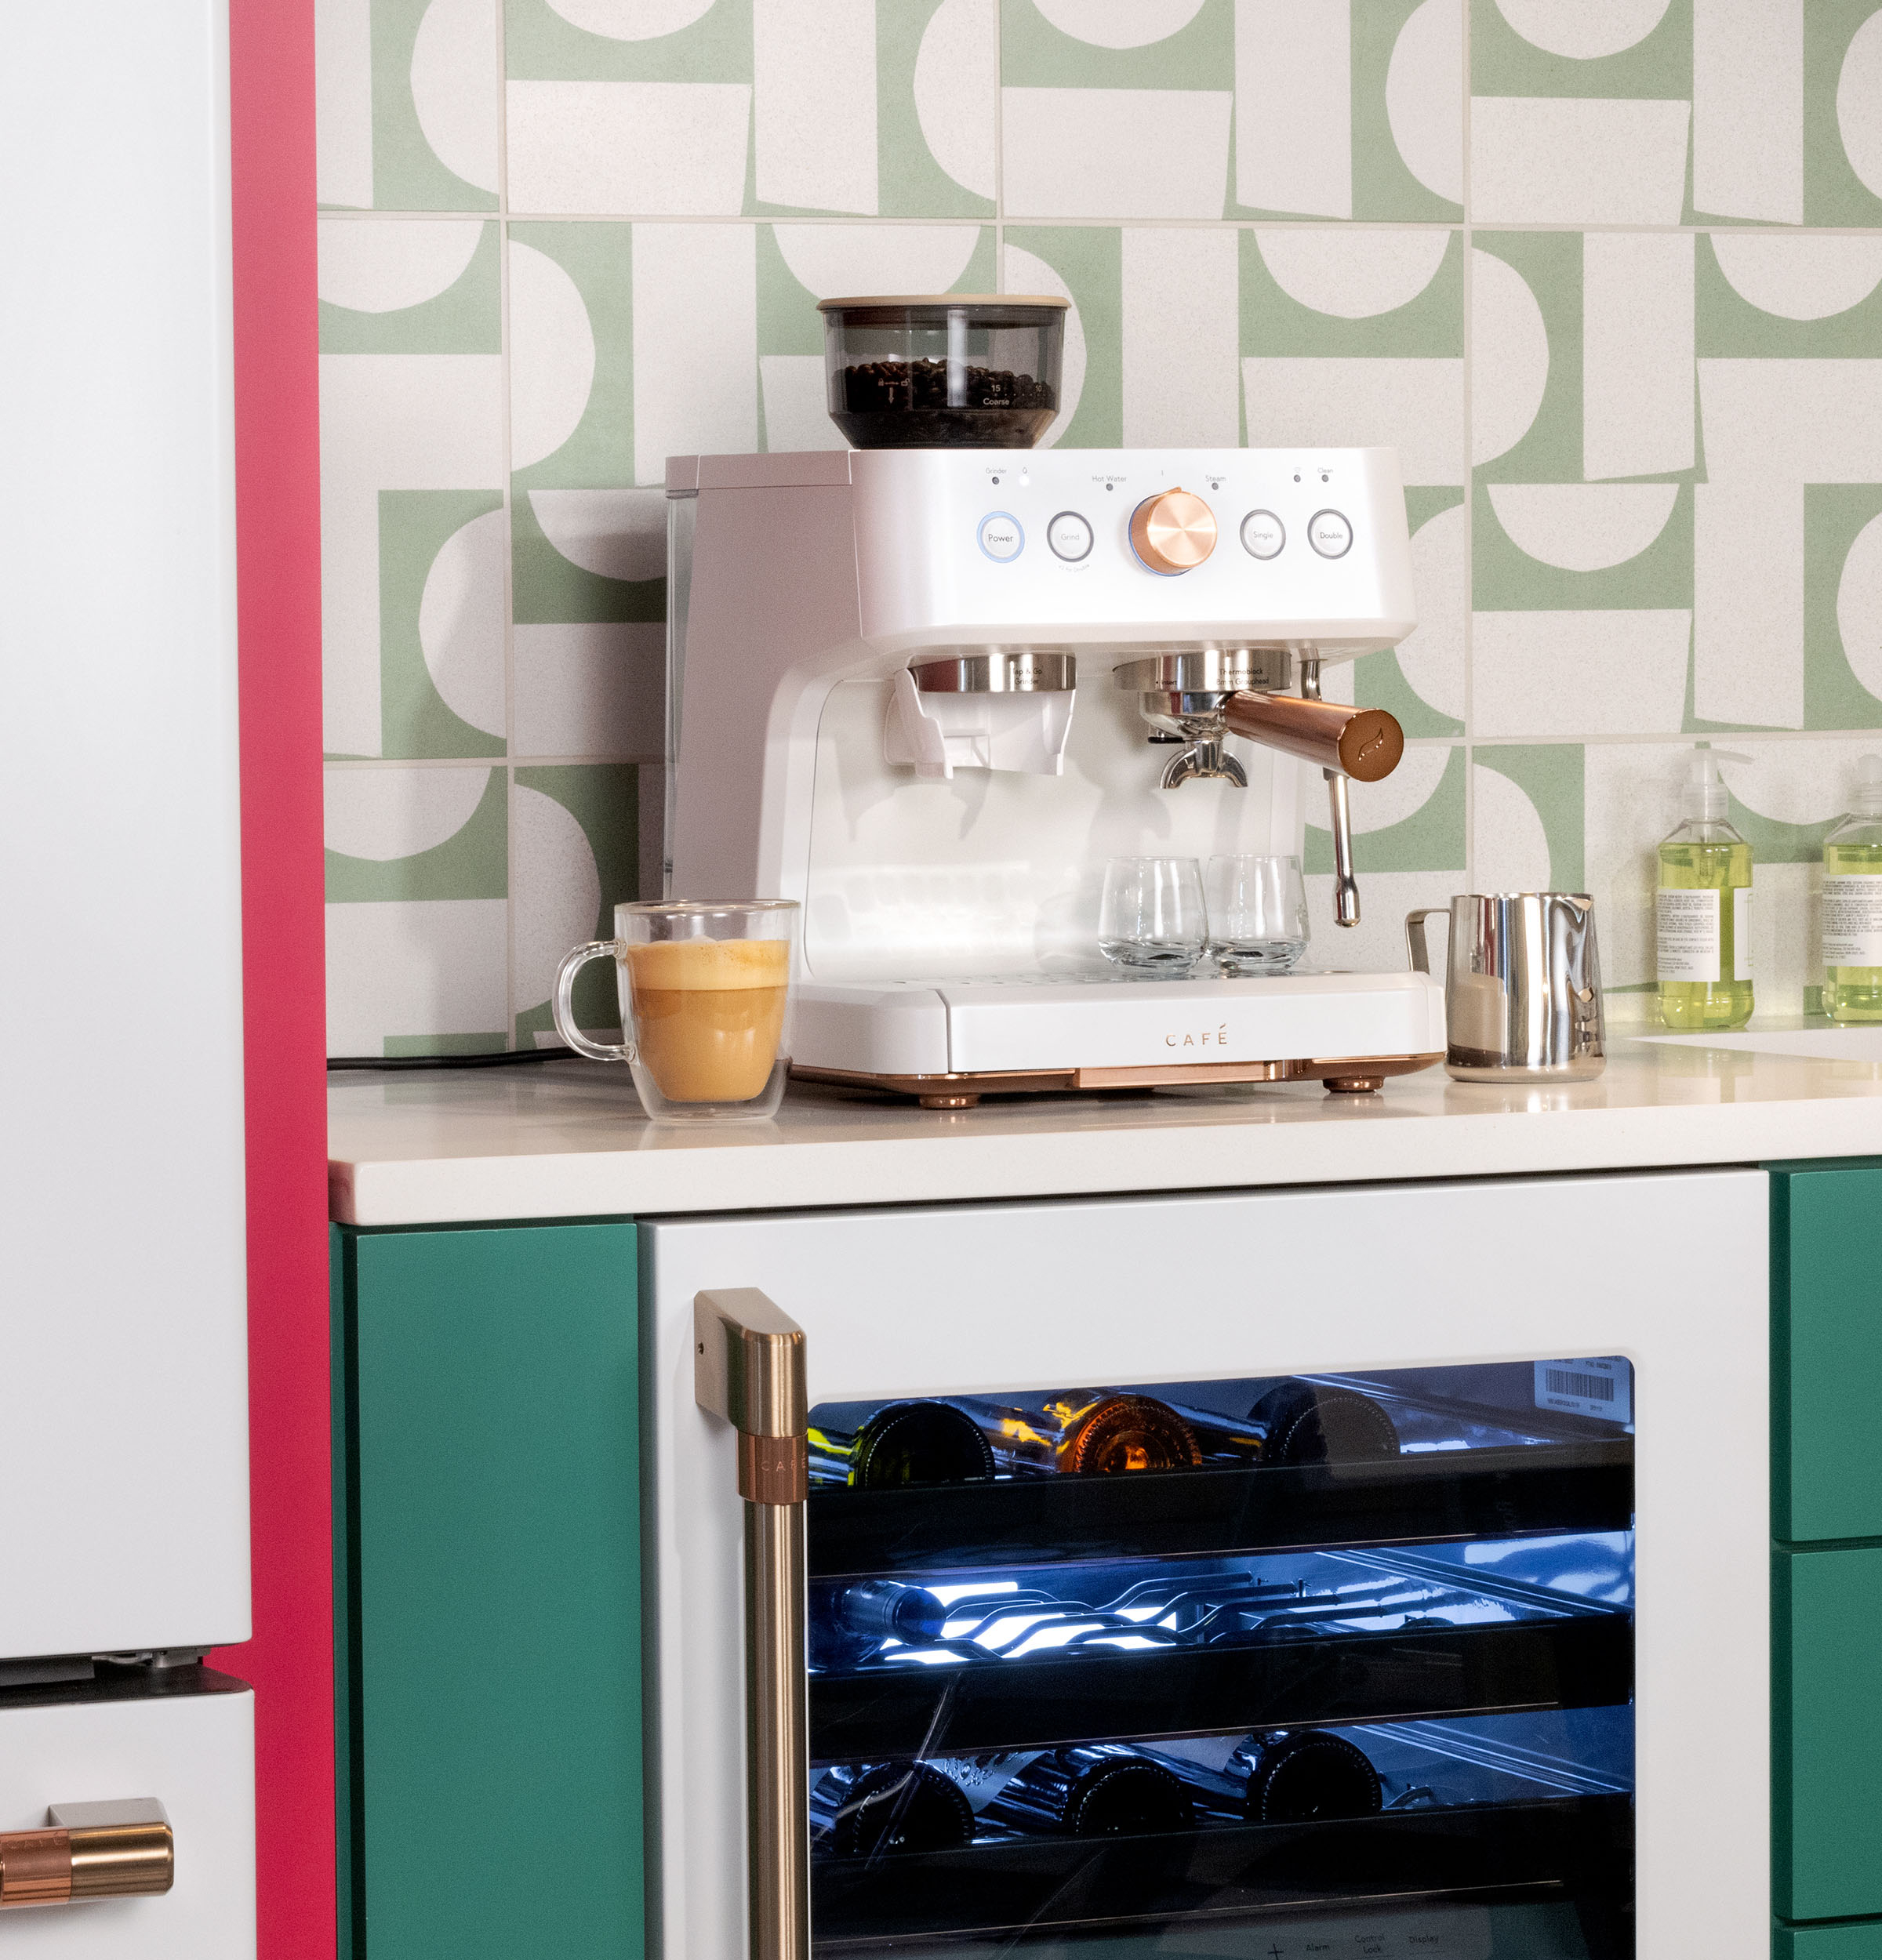 Best Buy: Café Bellissimo Semi-Automatic Espresso Machine with 15